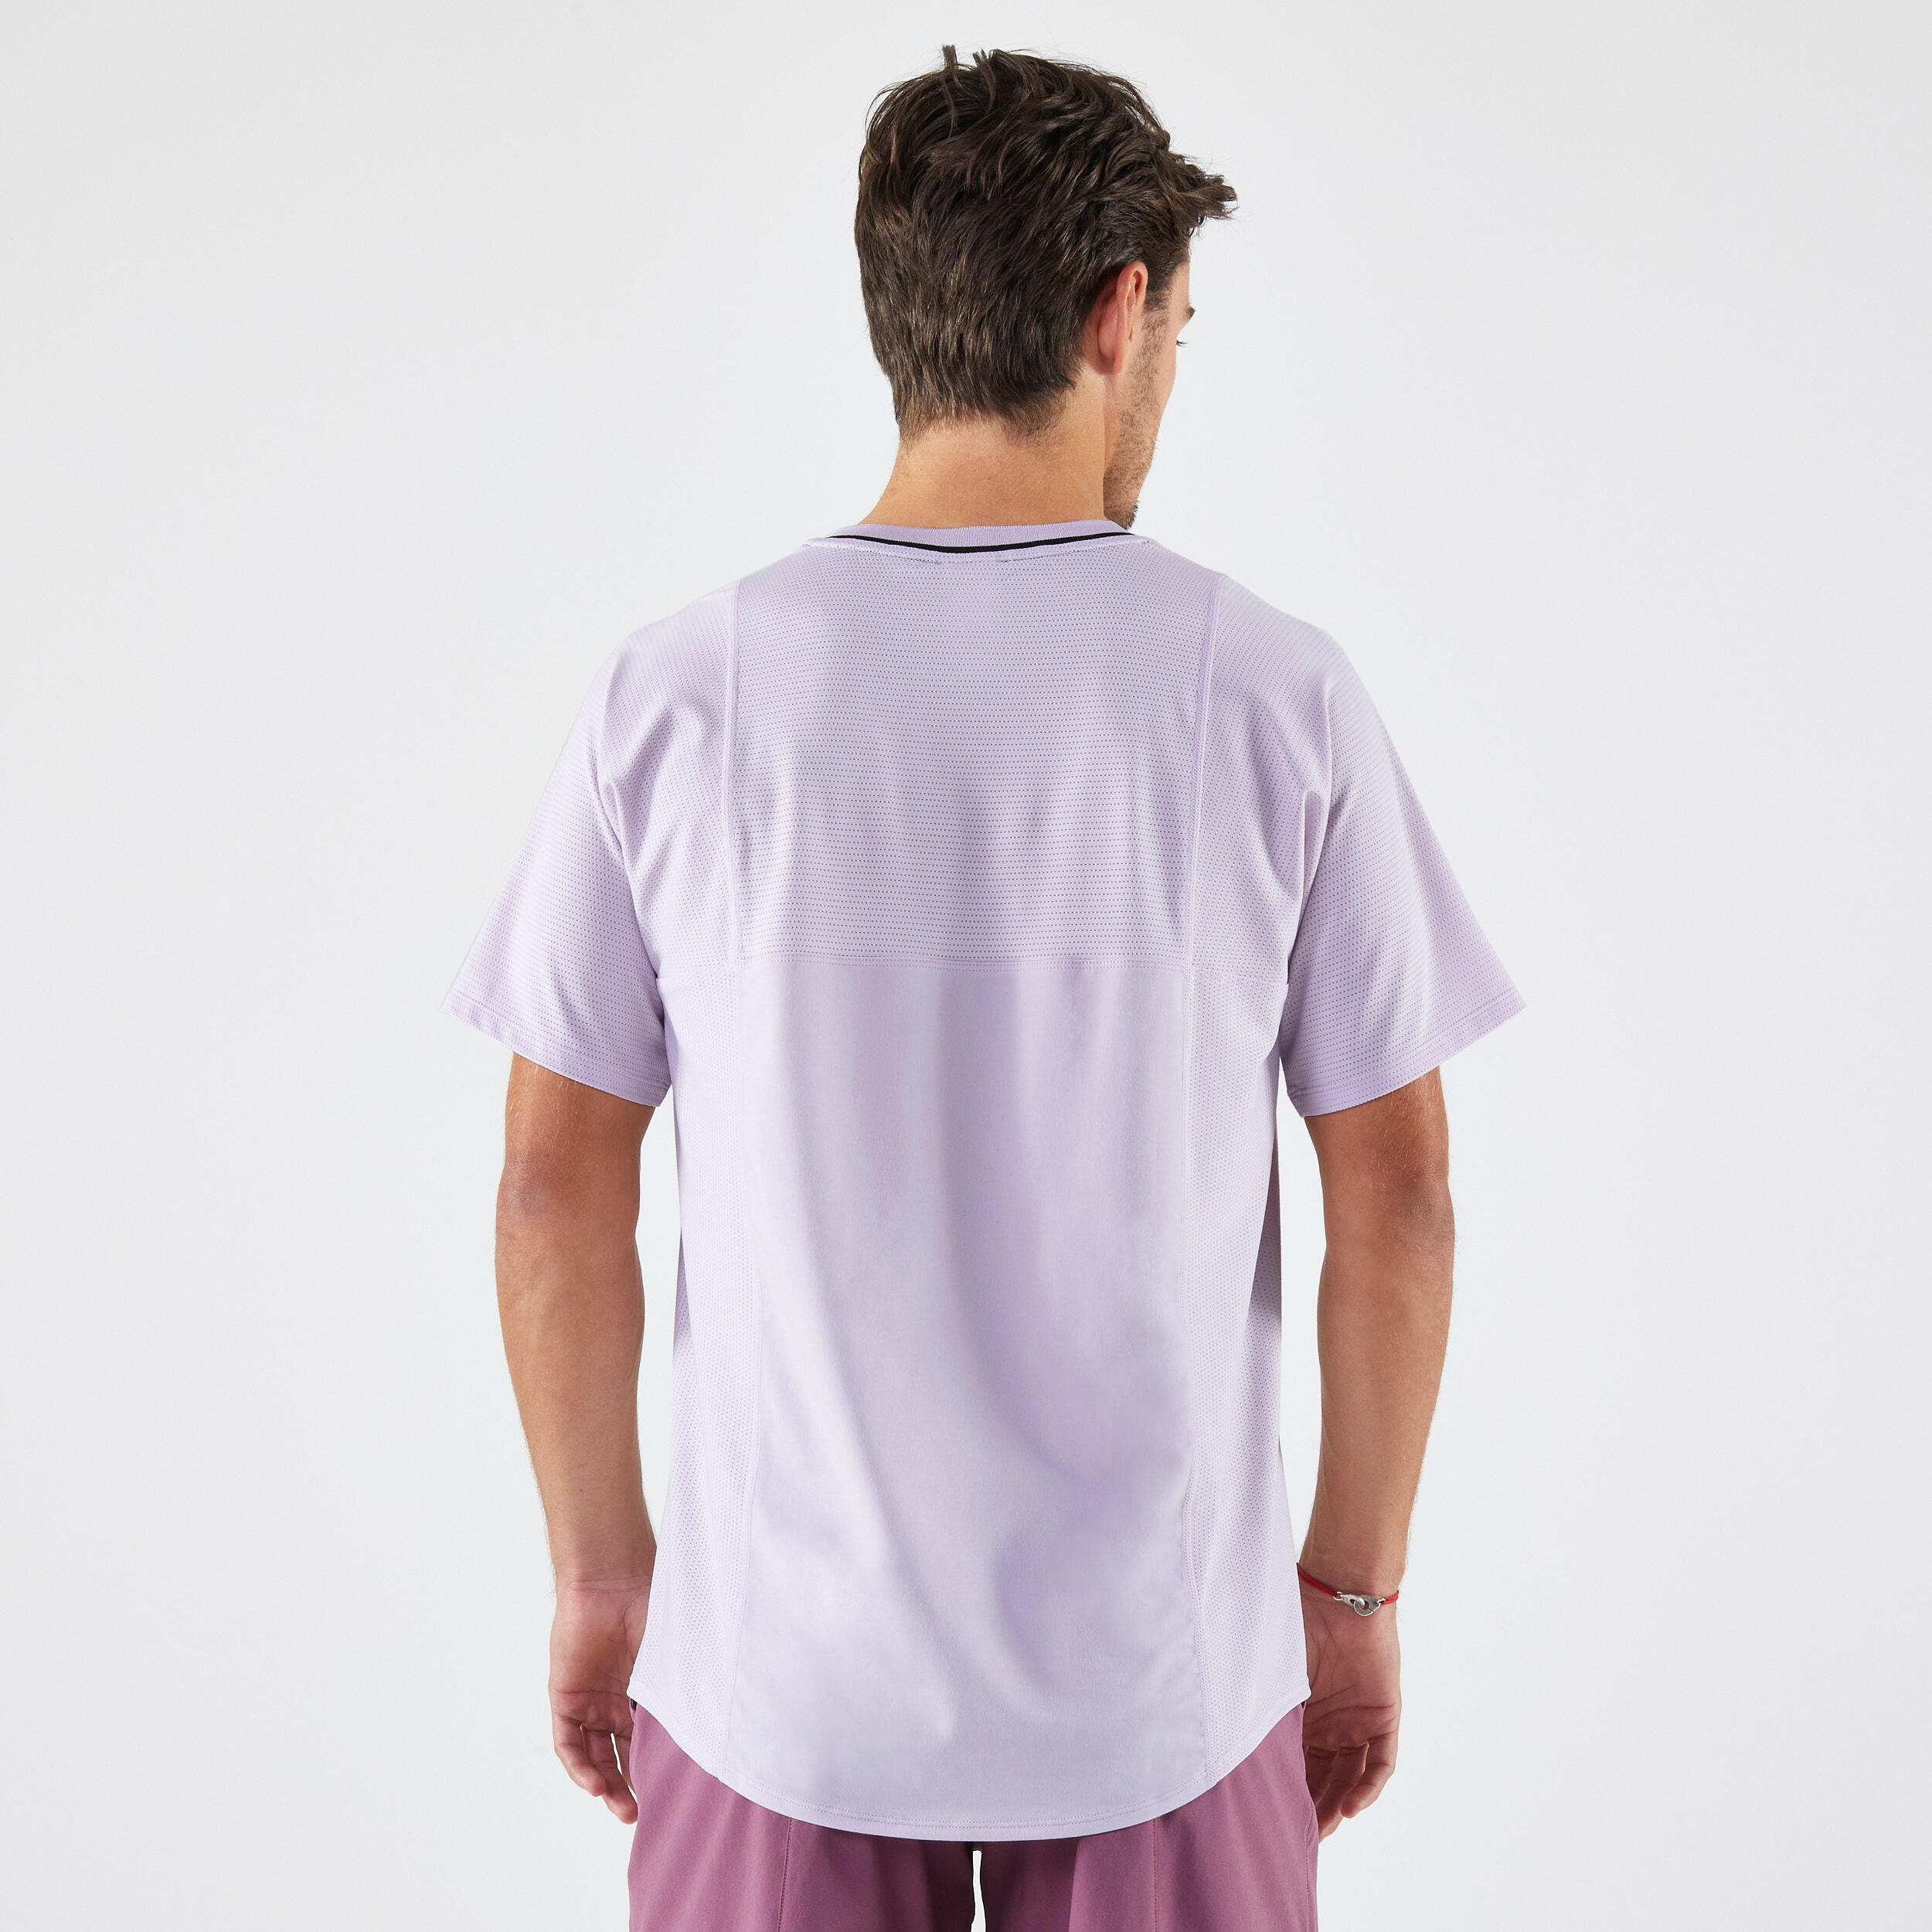 Men's Short-Sleeved Tennis T-Shirt Dry Gaël Monfils - Purple 2/6